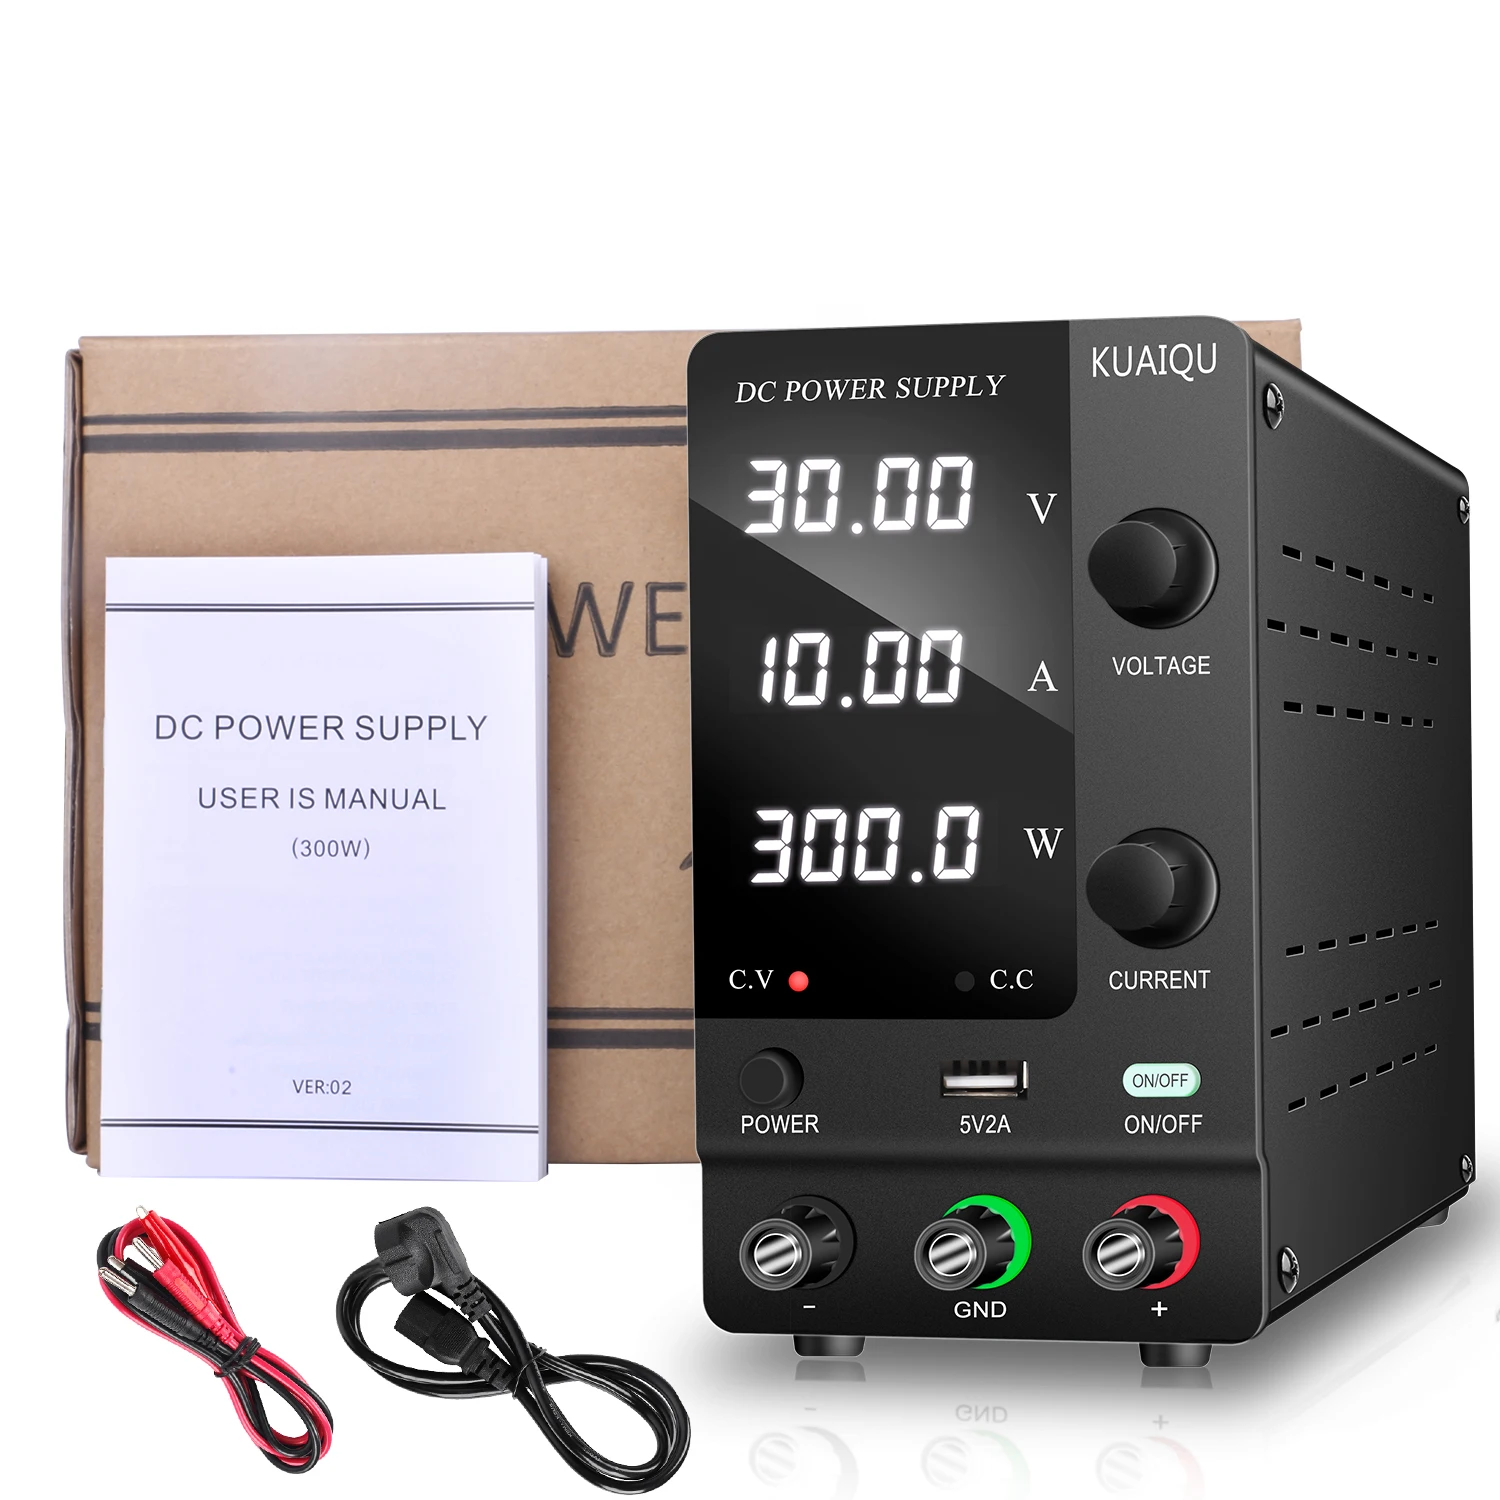 

KUAIQU 30V 10A 300W Adjustable DC Power Supply with Encode Knob Regulator Switching Power Supply SPPS-C3010